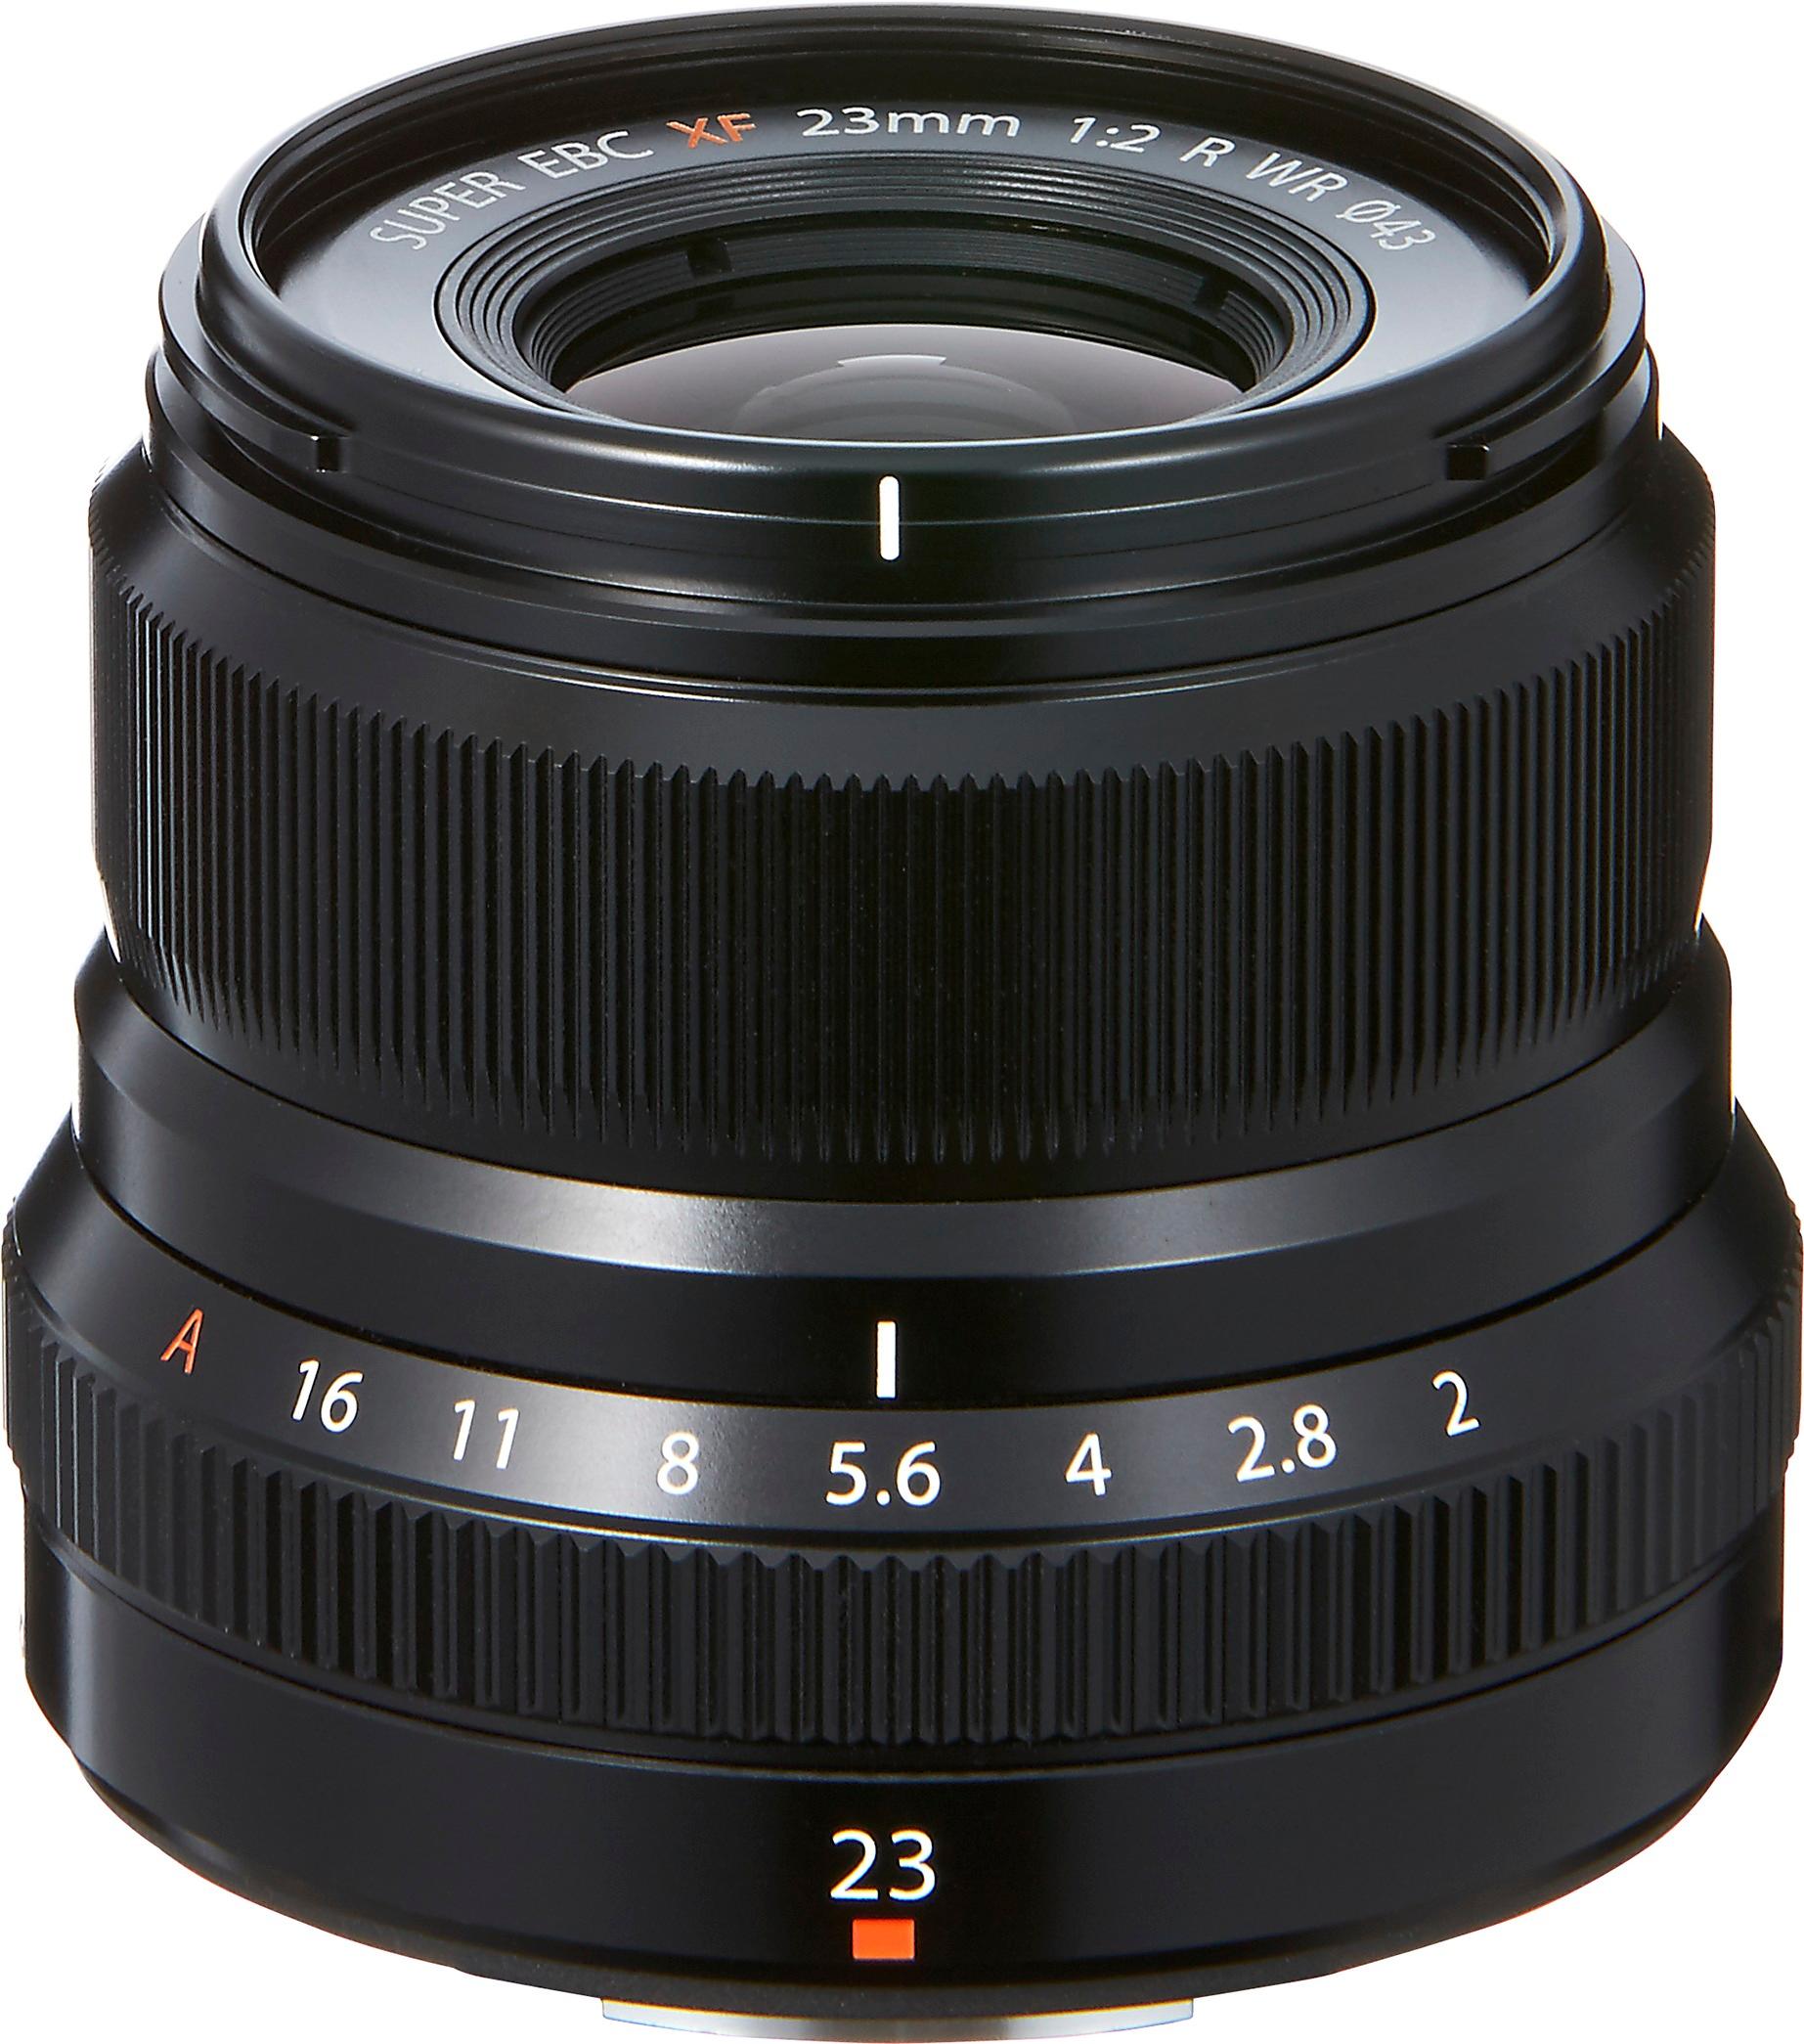 Fujinon XF23mmF2 R WR Wide-angle Lens for Fujifilm X-Mount System Cameras - Black